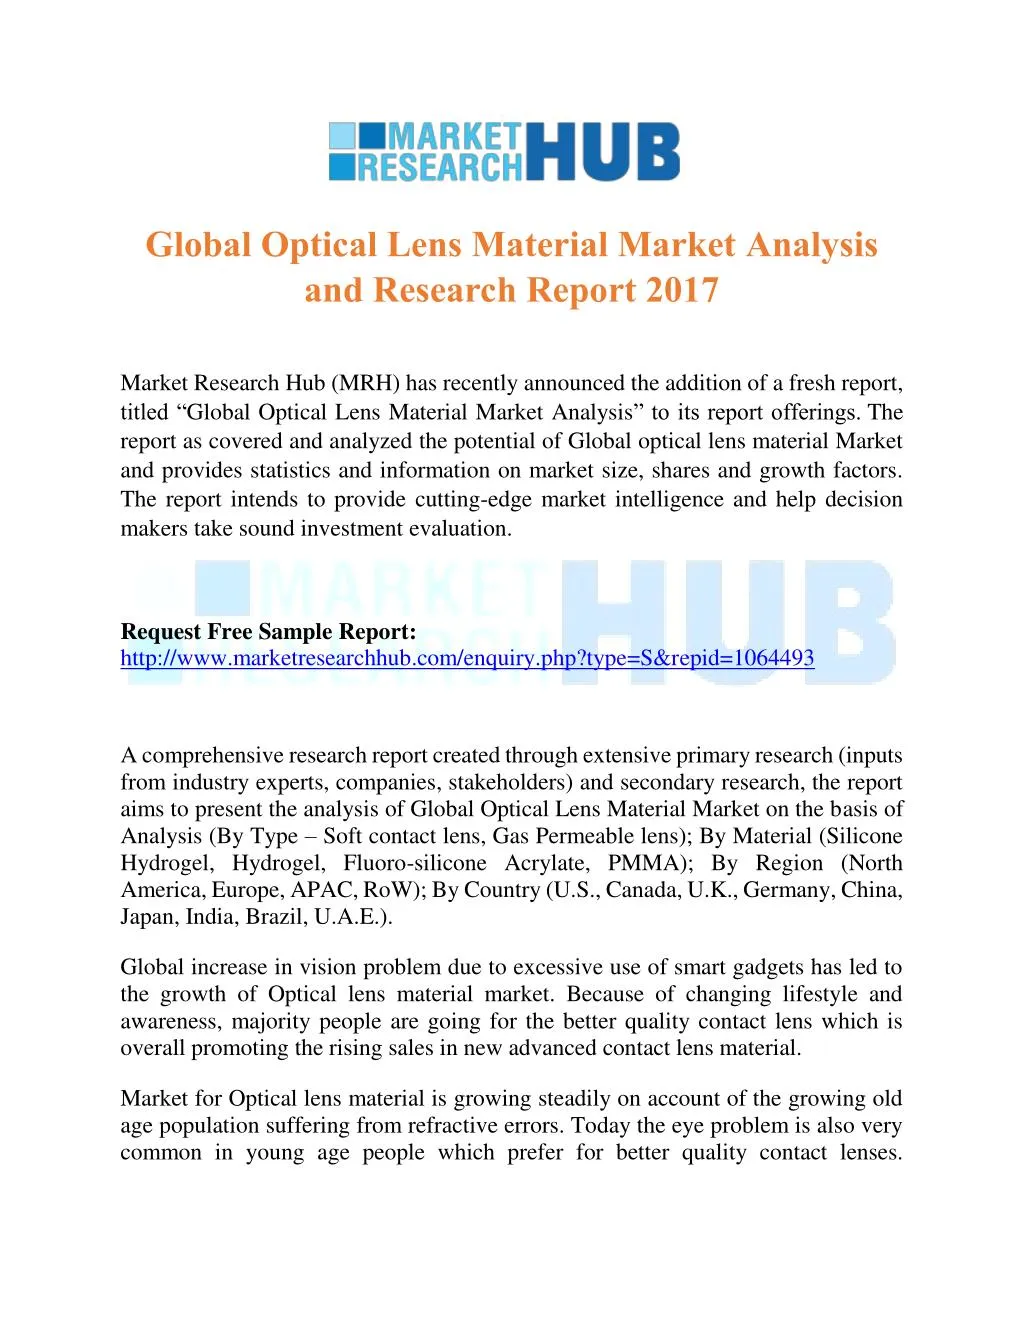 global optical lens material market analysis